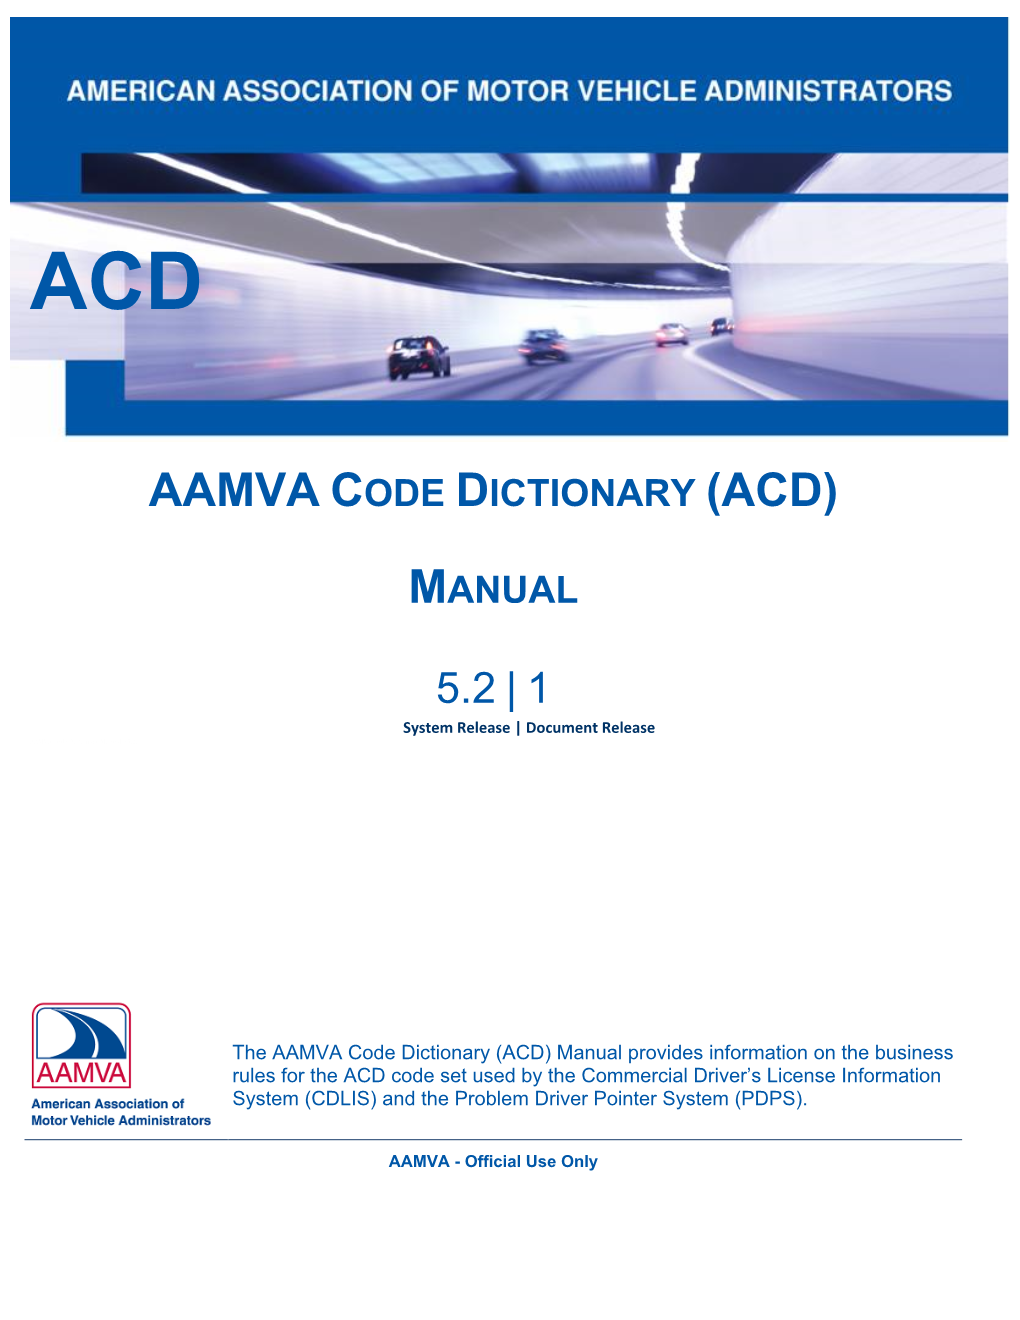 AAMVA Code Dictionary (ACD) Manual, Release 5.2.1